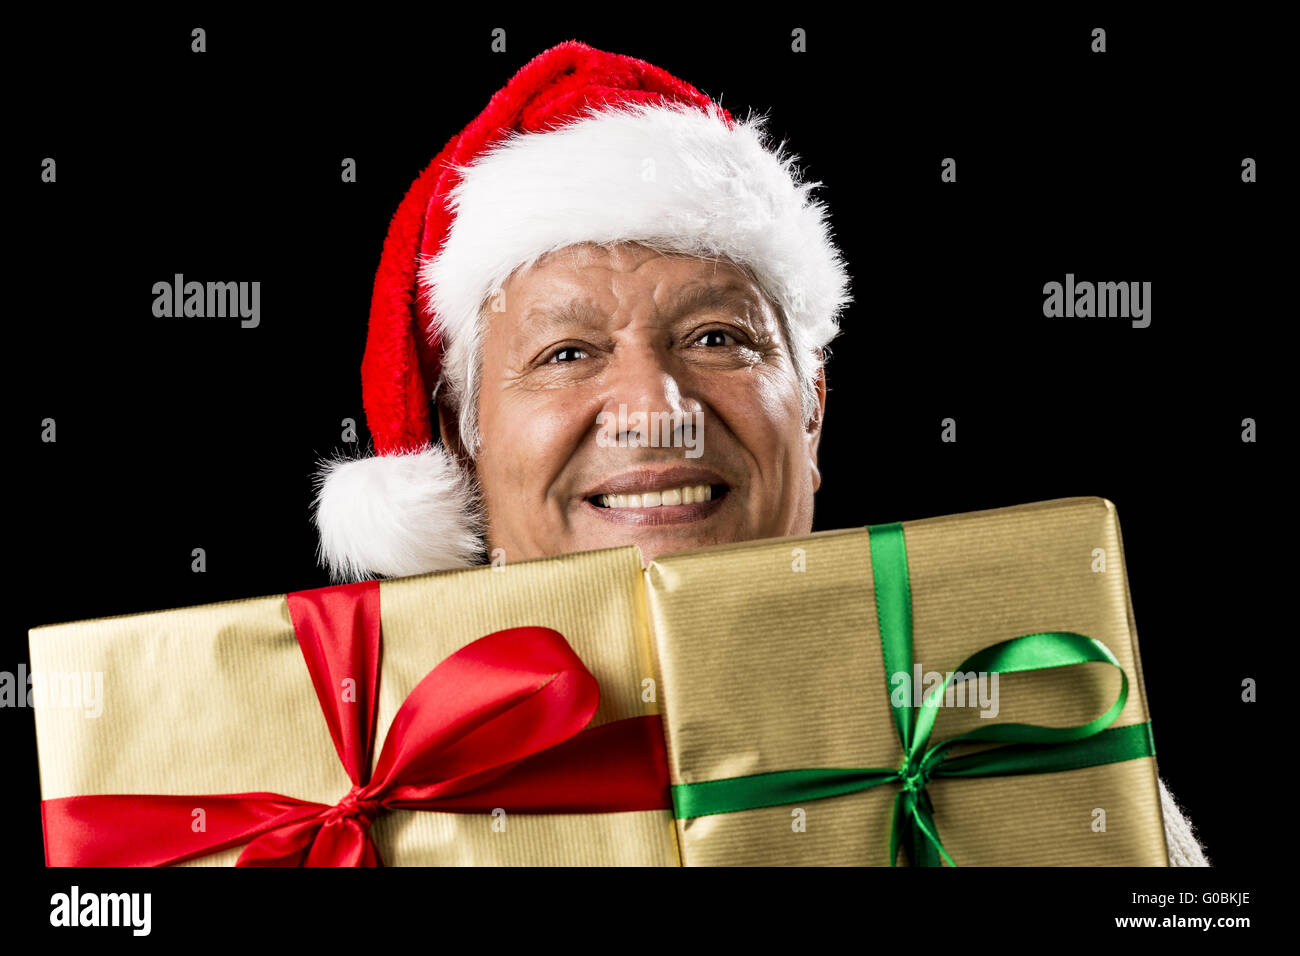 Smiling Aged Man Peeking Across Two Golden Gifts Stock Photo